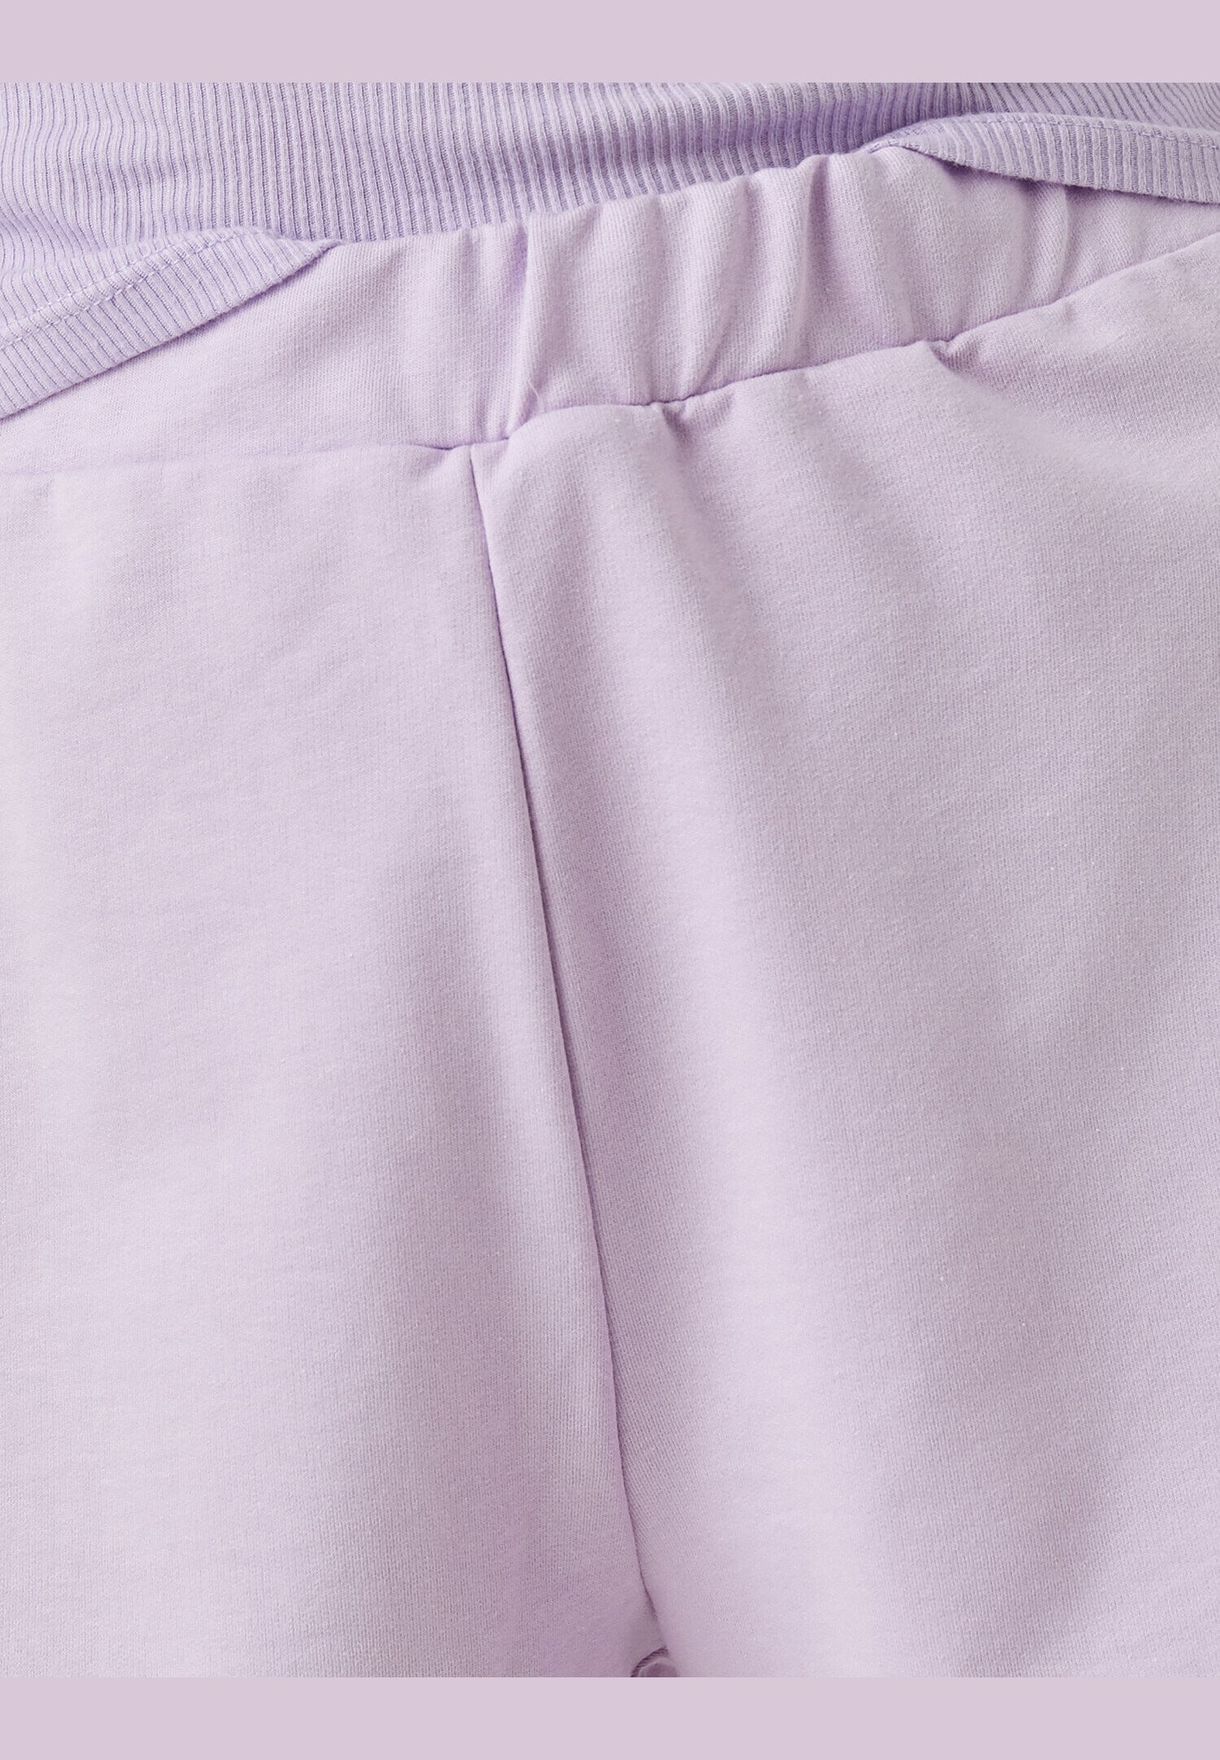 Stripe Detailed Shorts Cotton